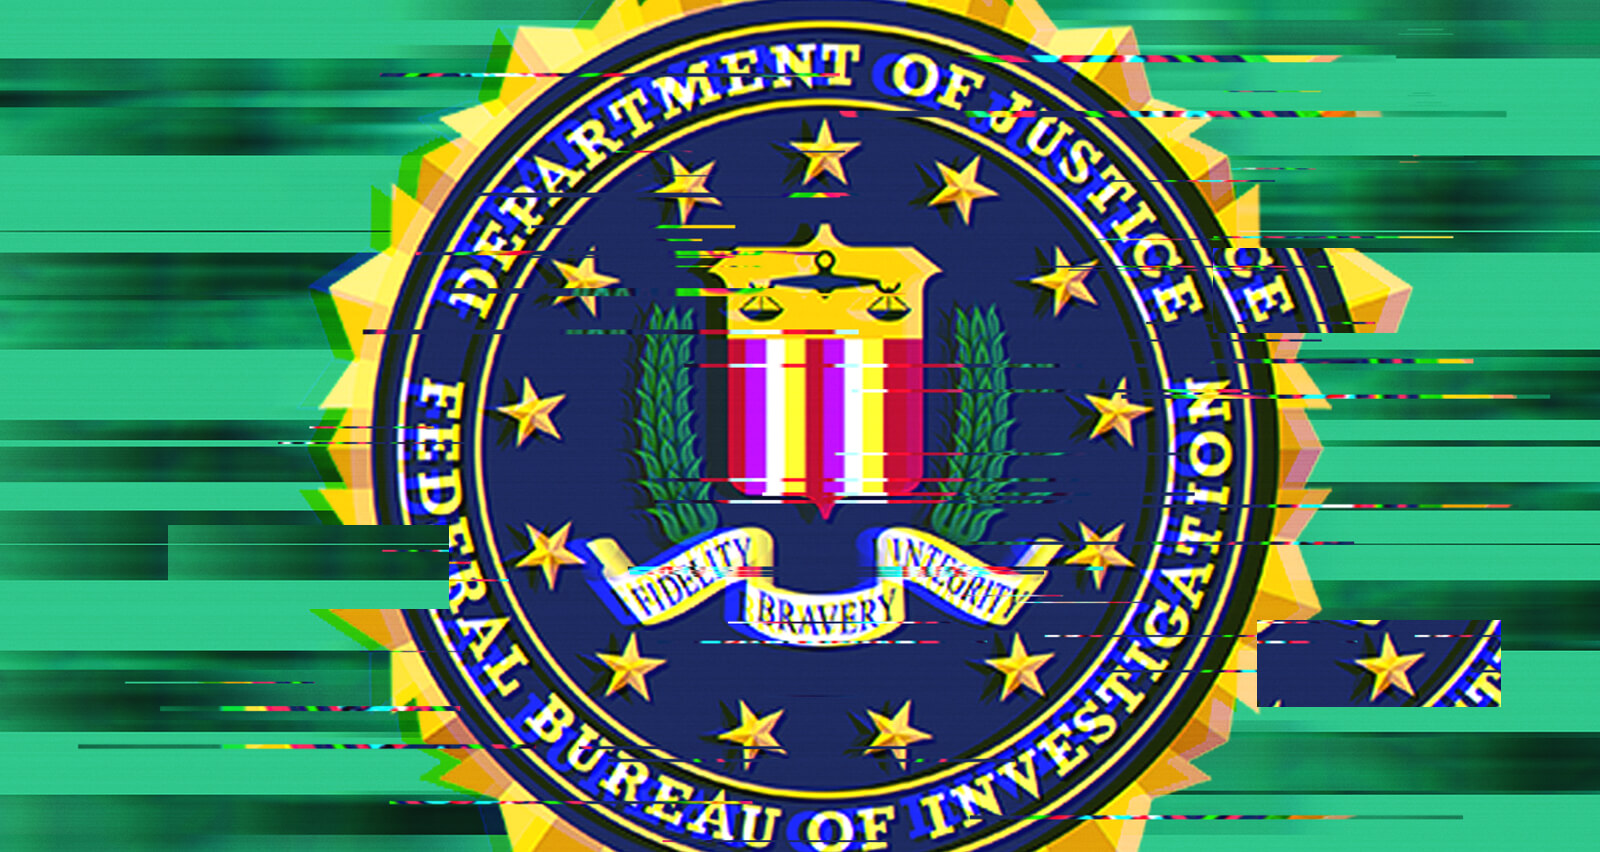 FBI Emblem